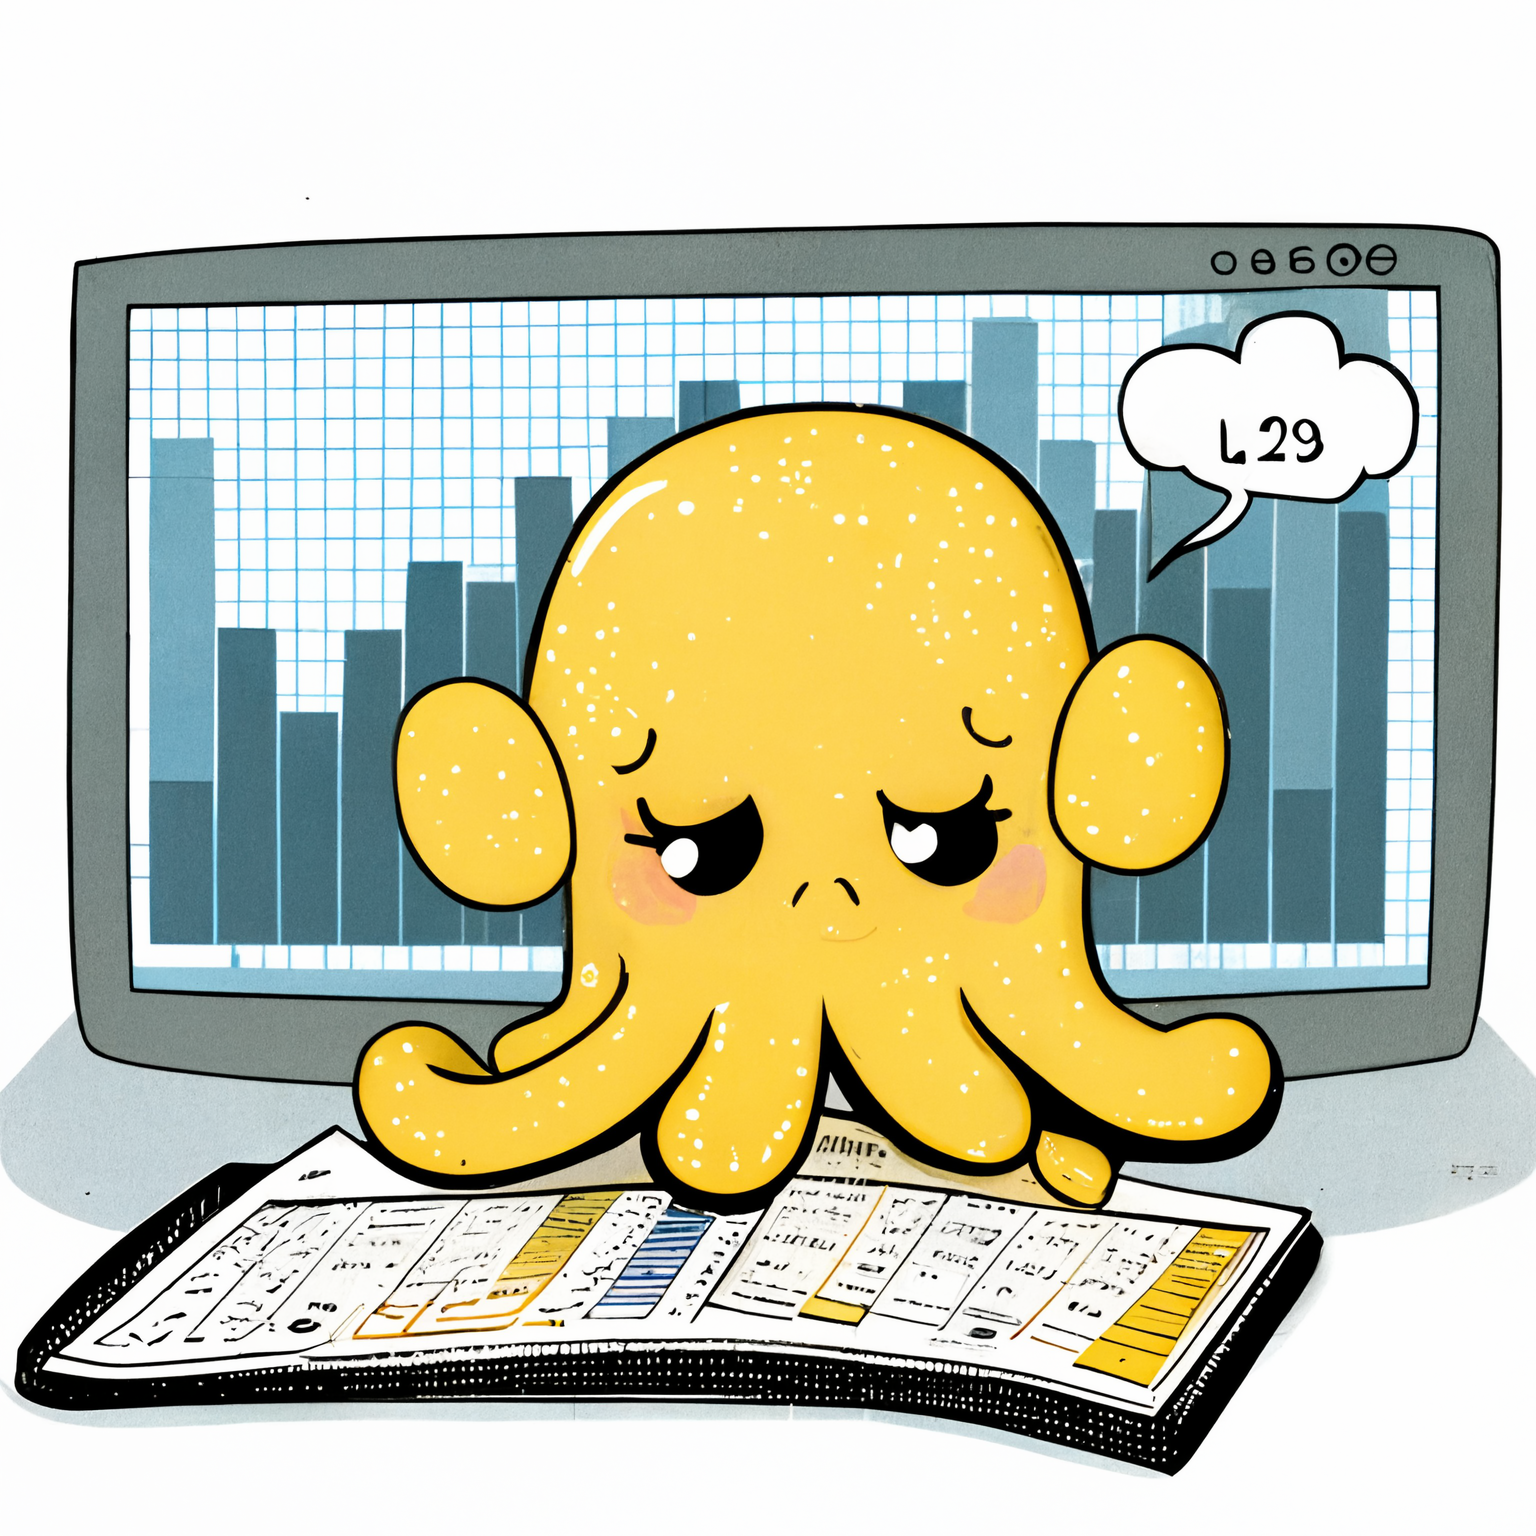 A Beginner Rich Octopus Looking to Build Financial Success